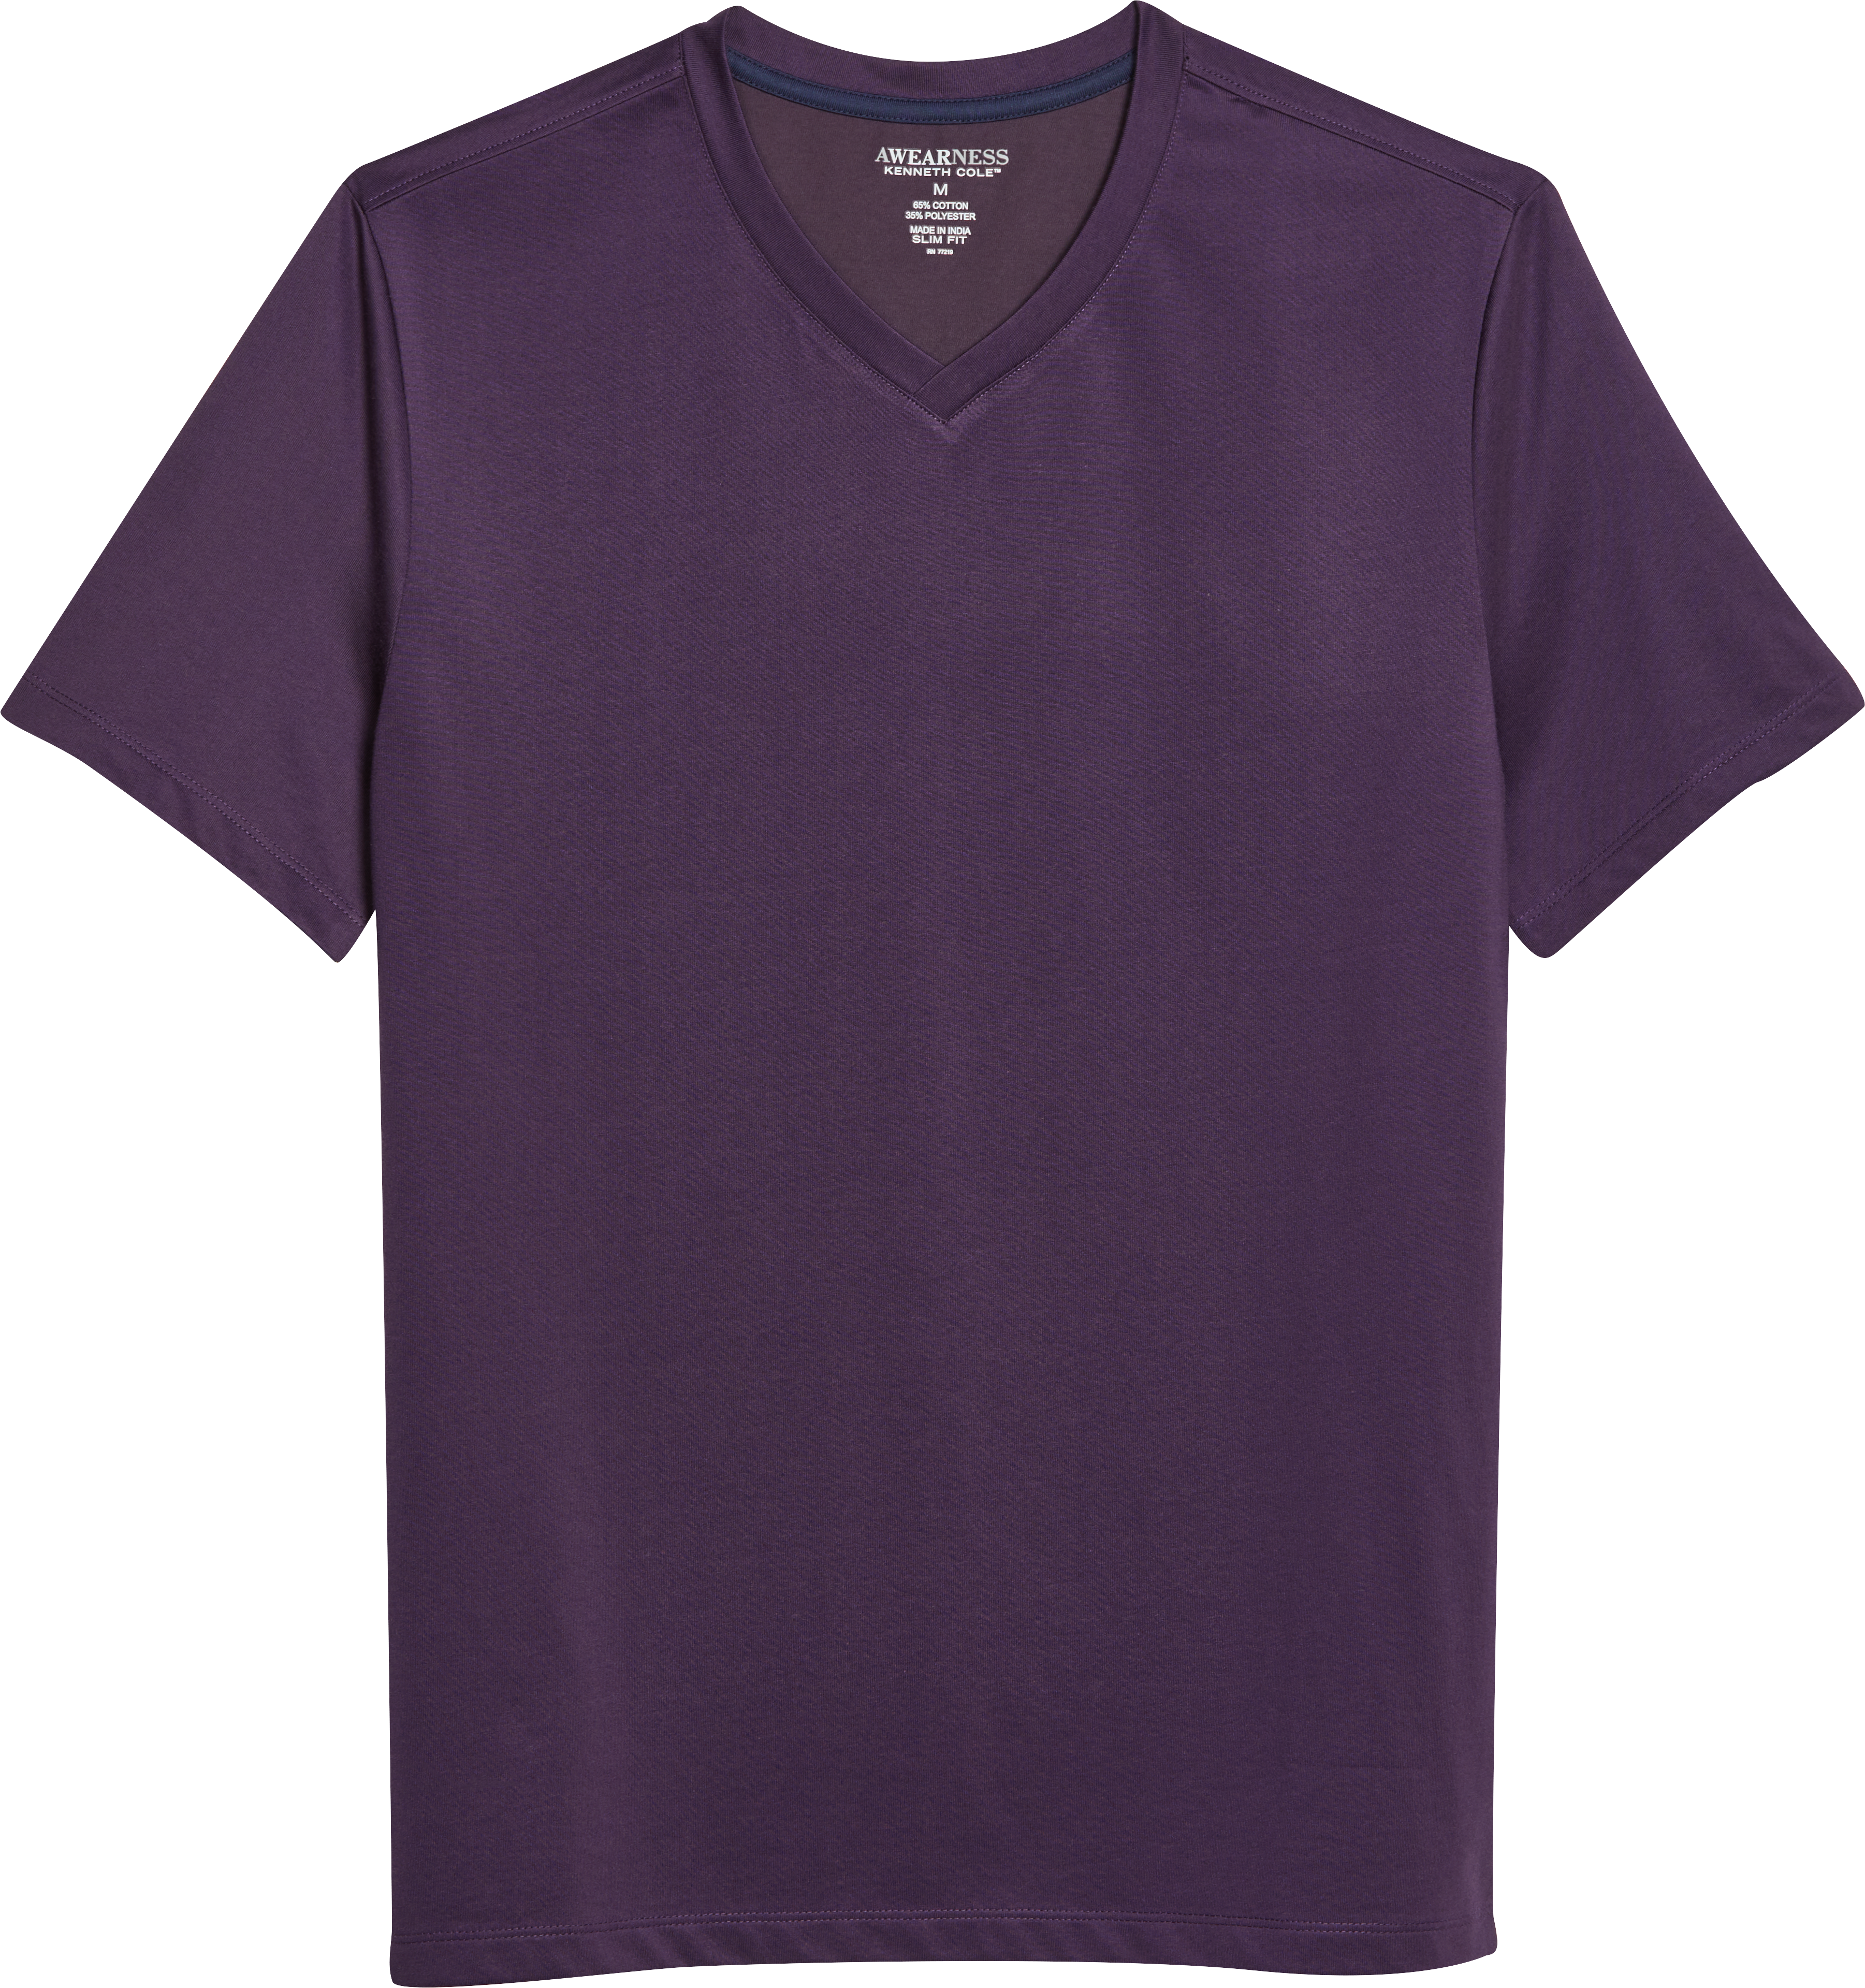 Awearness Kenneth Cole Slim Fit V-Neck Short Sleeve T-Shirt